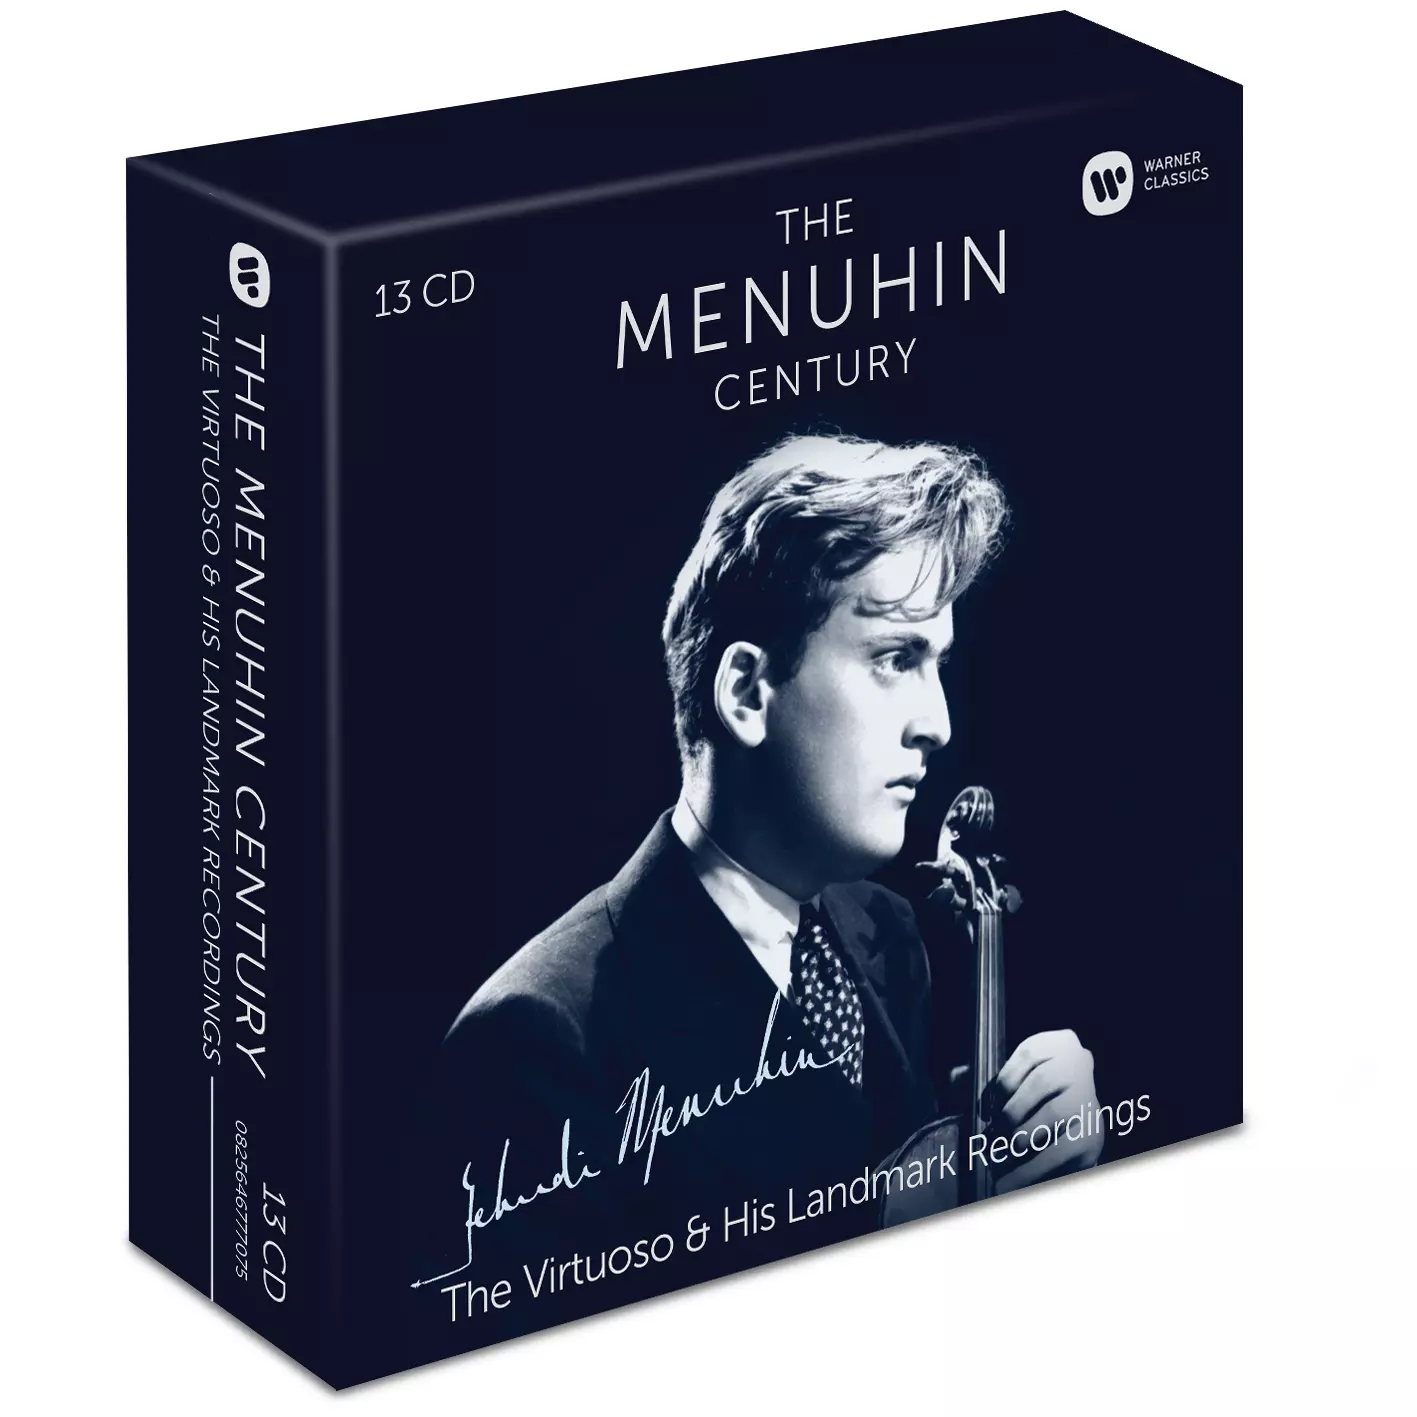 The Menuhin Century: The Virtuoso and His Landmark Recordings